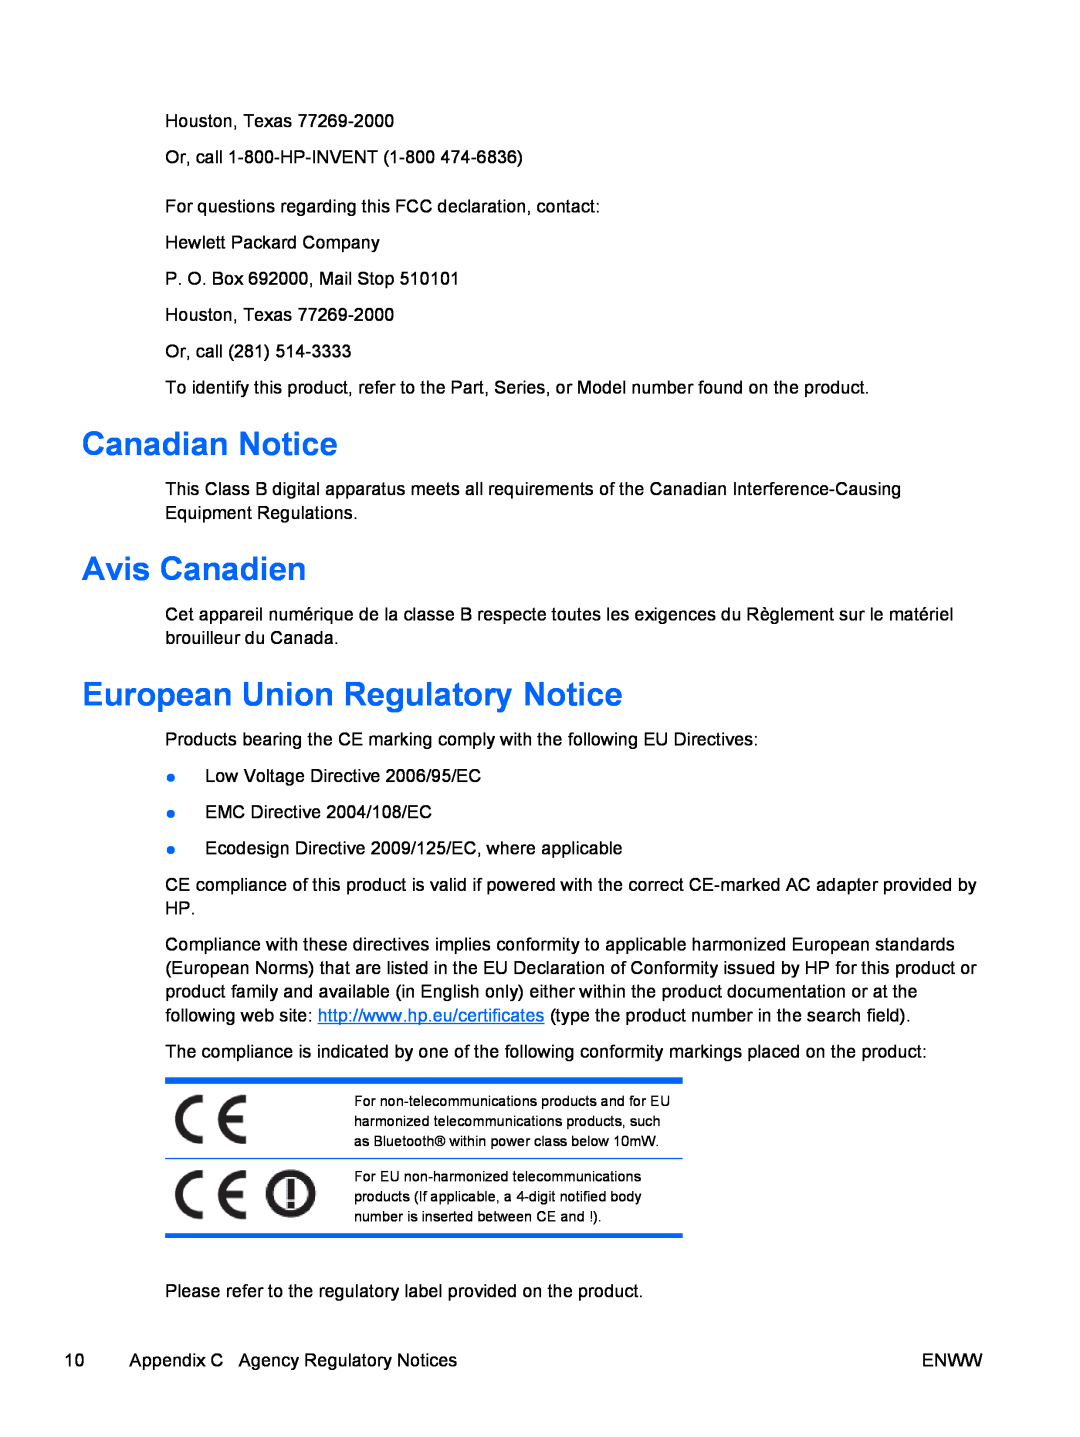 HP 8000 tower manual Canadian Notice, Avis Canadien, European Union Regulatory Notice 